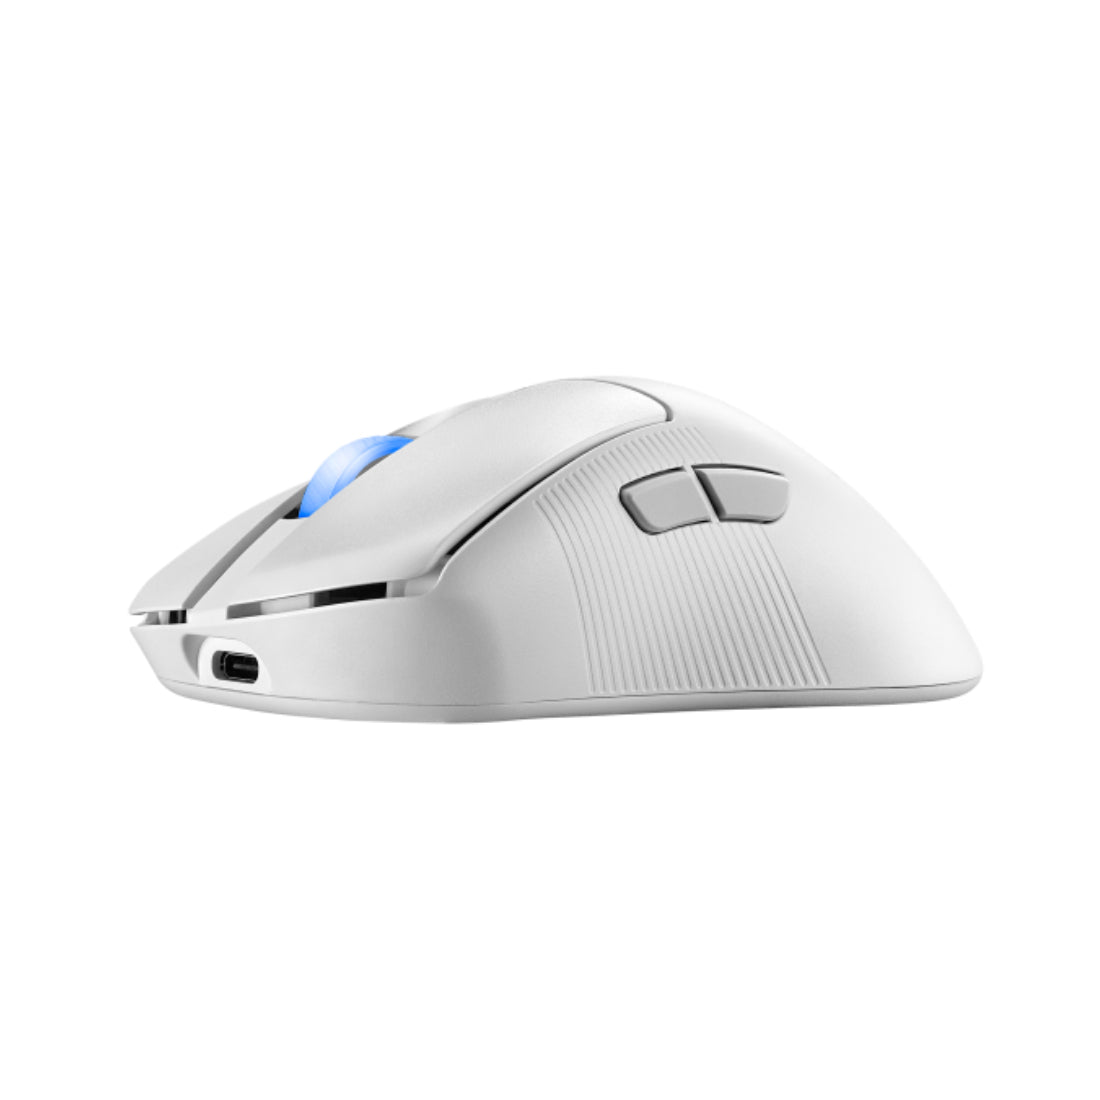 Asus ROG Keris II Ace Wireless Gaming Mouse - White - فأرة